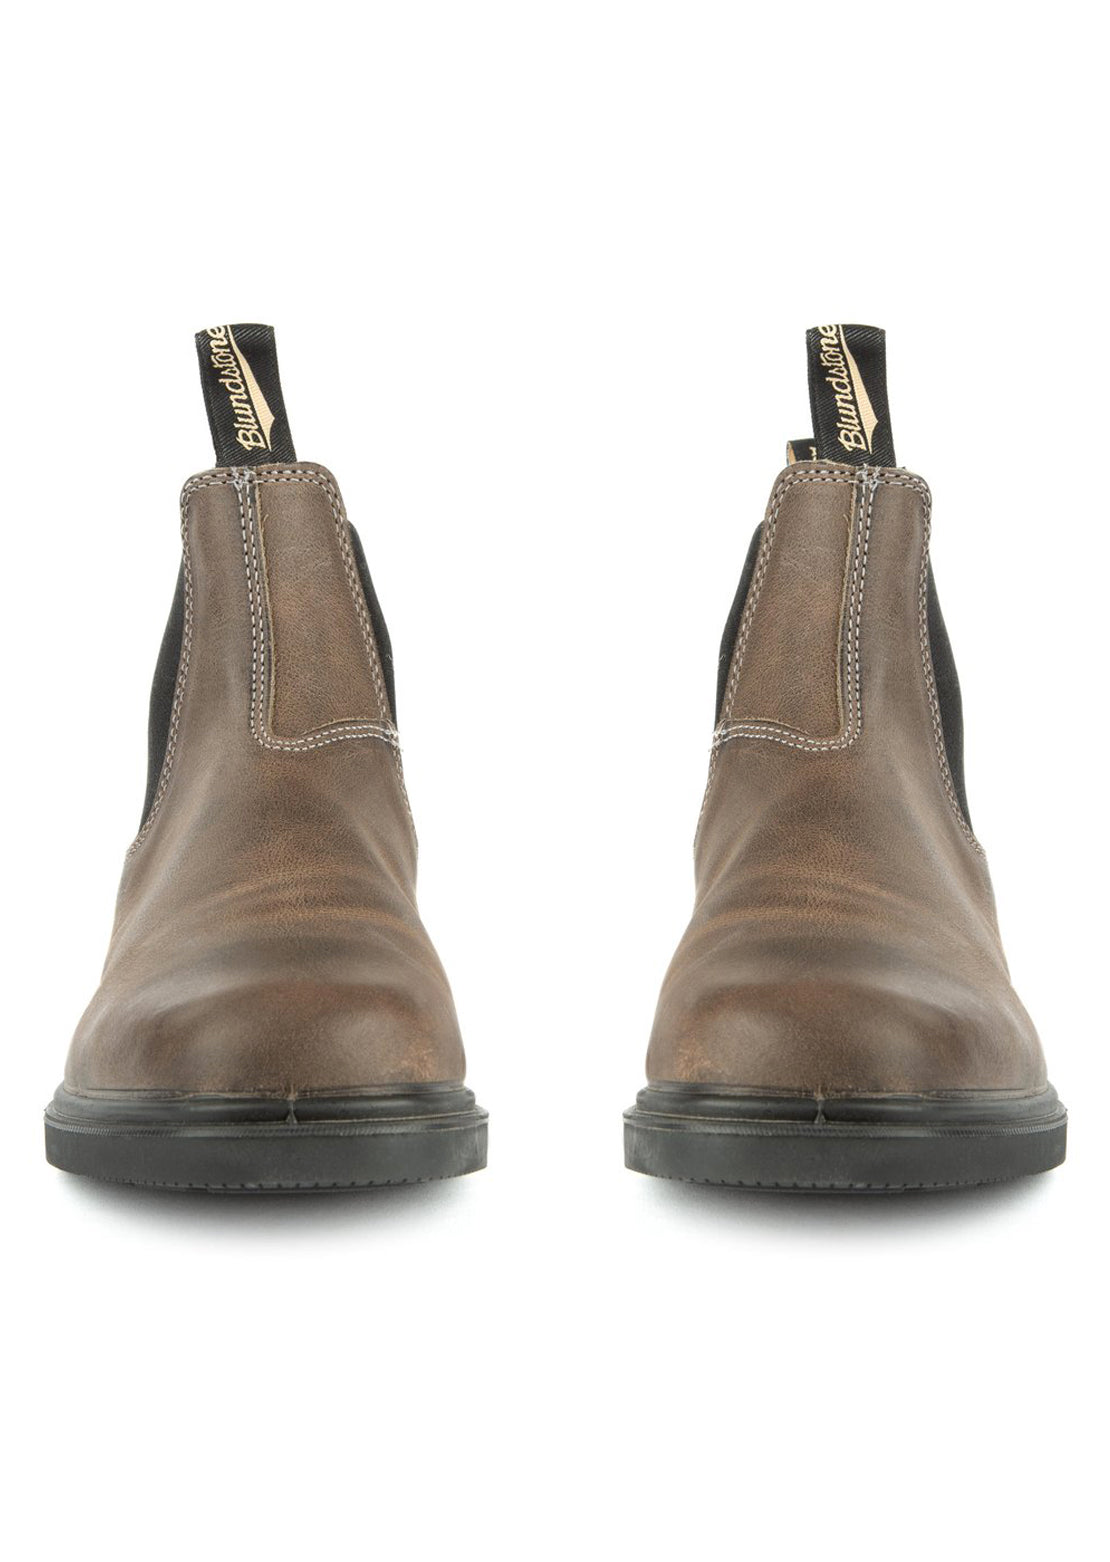 Blundstone 1395 Chisel Toe Boots - PRFO 